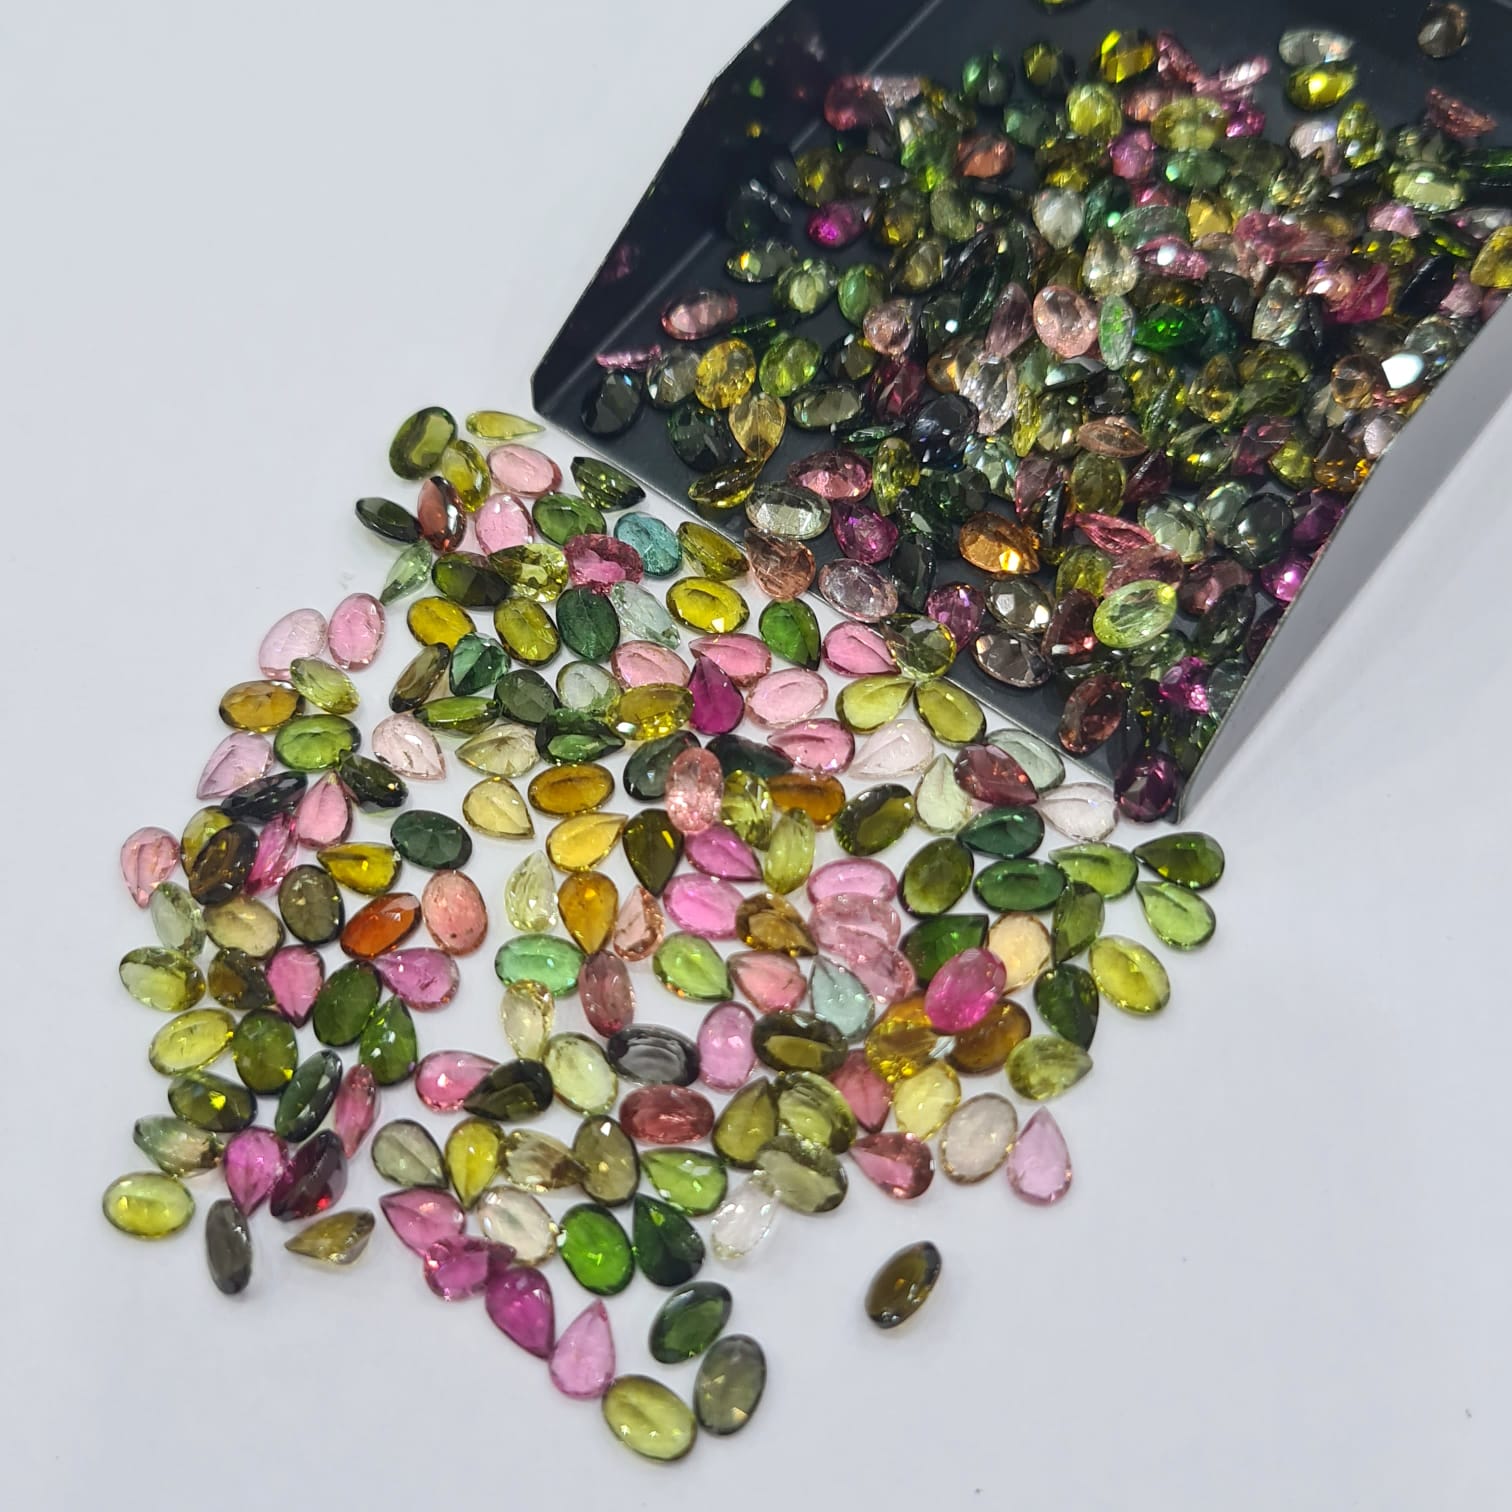 BFCM🔥 30 Pcs Tourmaline Facted Gemstones | 5-6mm Ovals - The LabradoriteKing